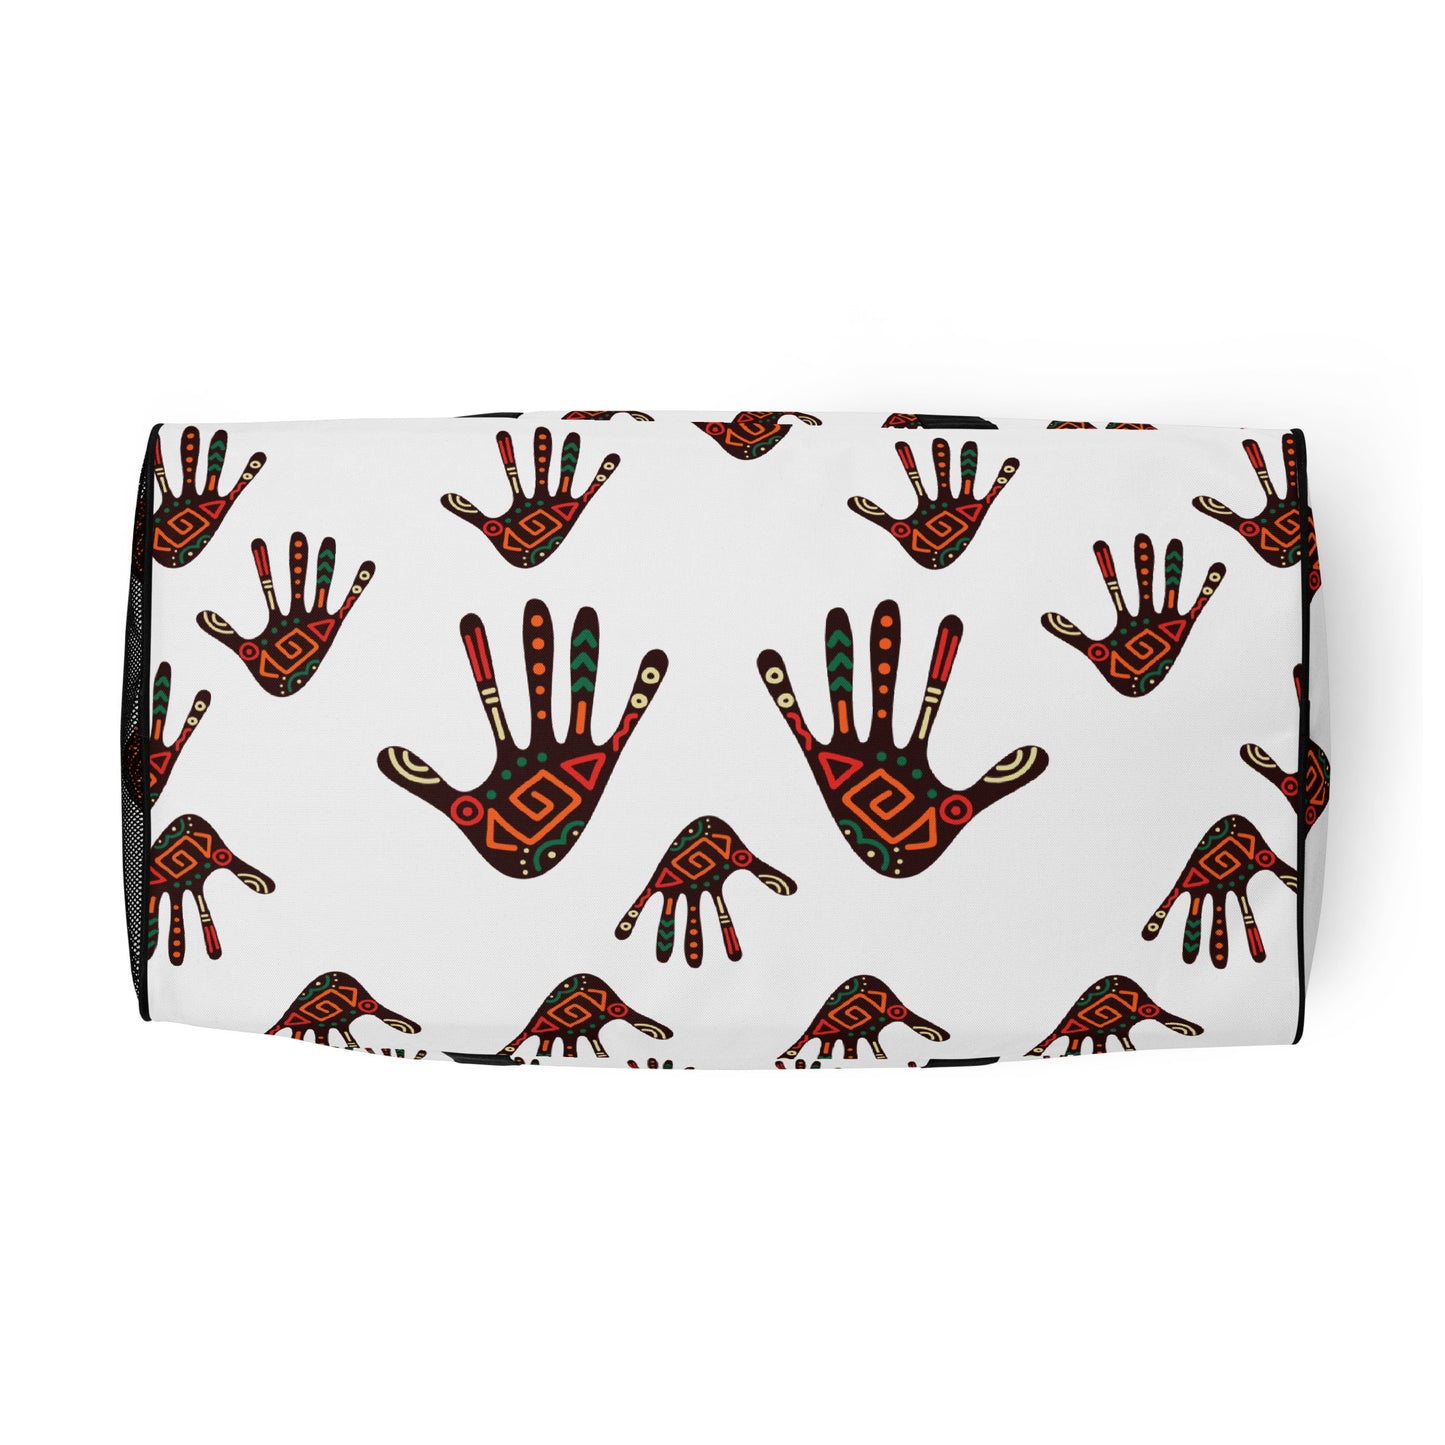 Duro Tribal Palm Print Duffle Bag